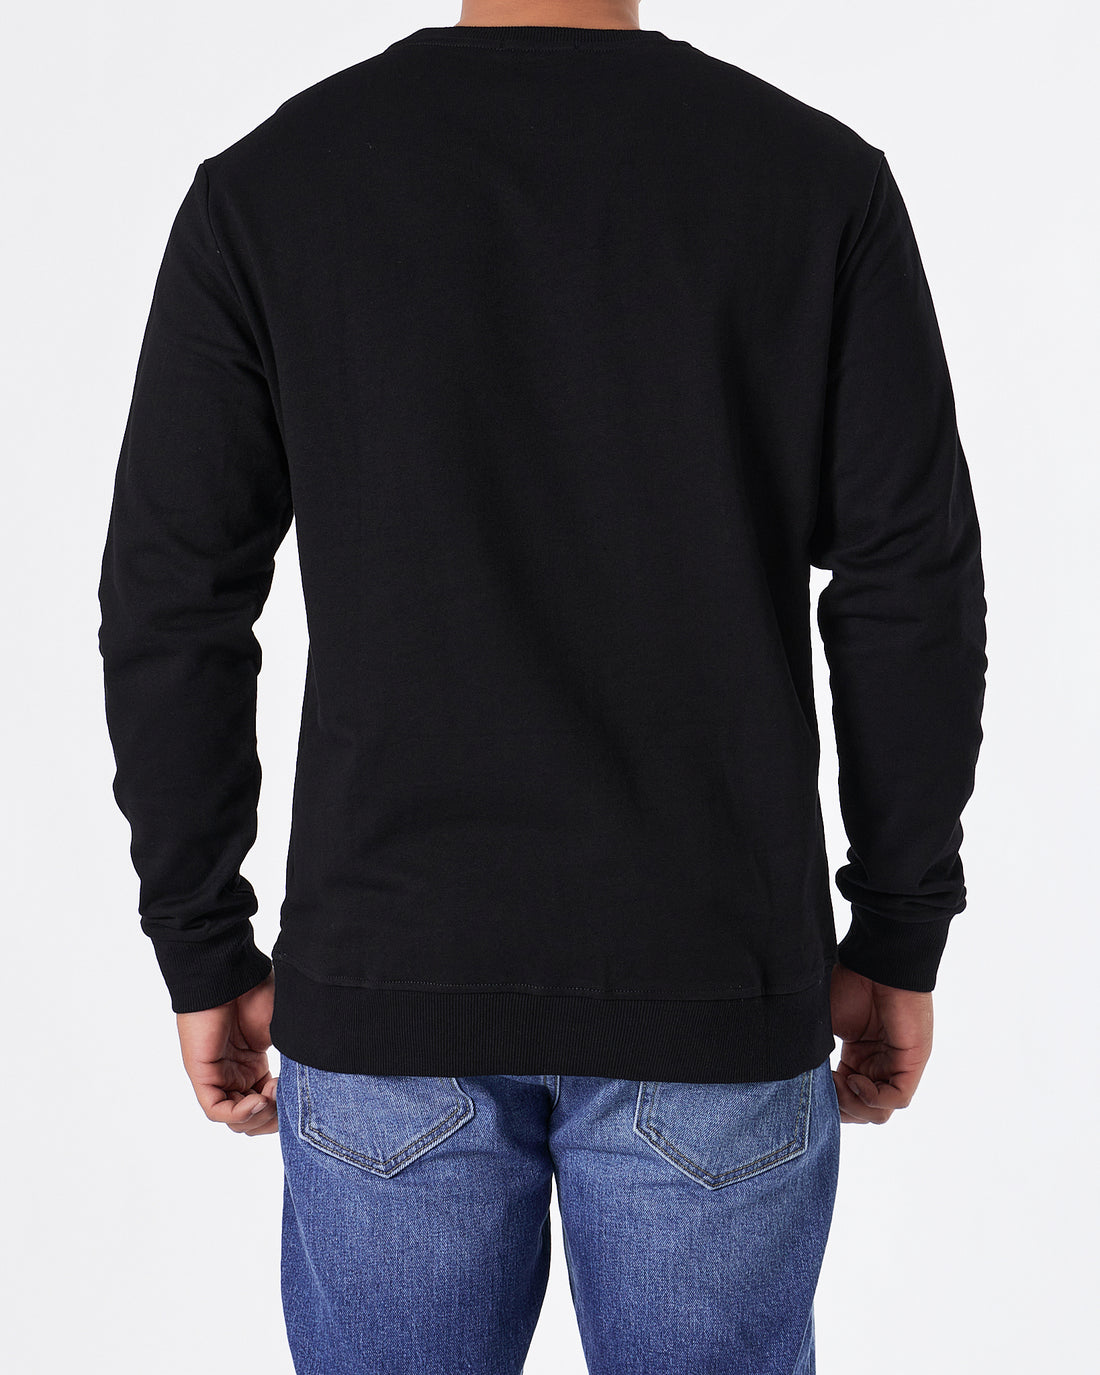 RL Plain Color Men Black Sweater 29.90